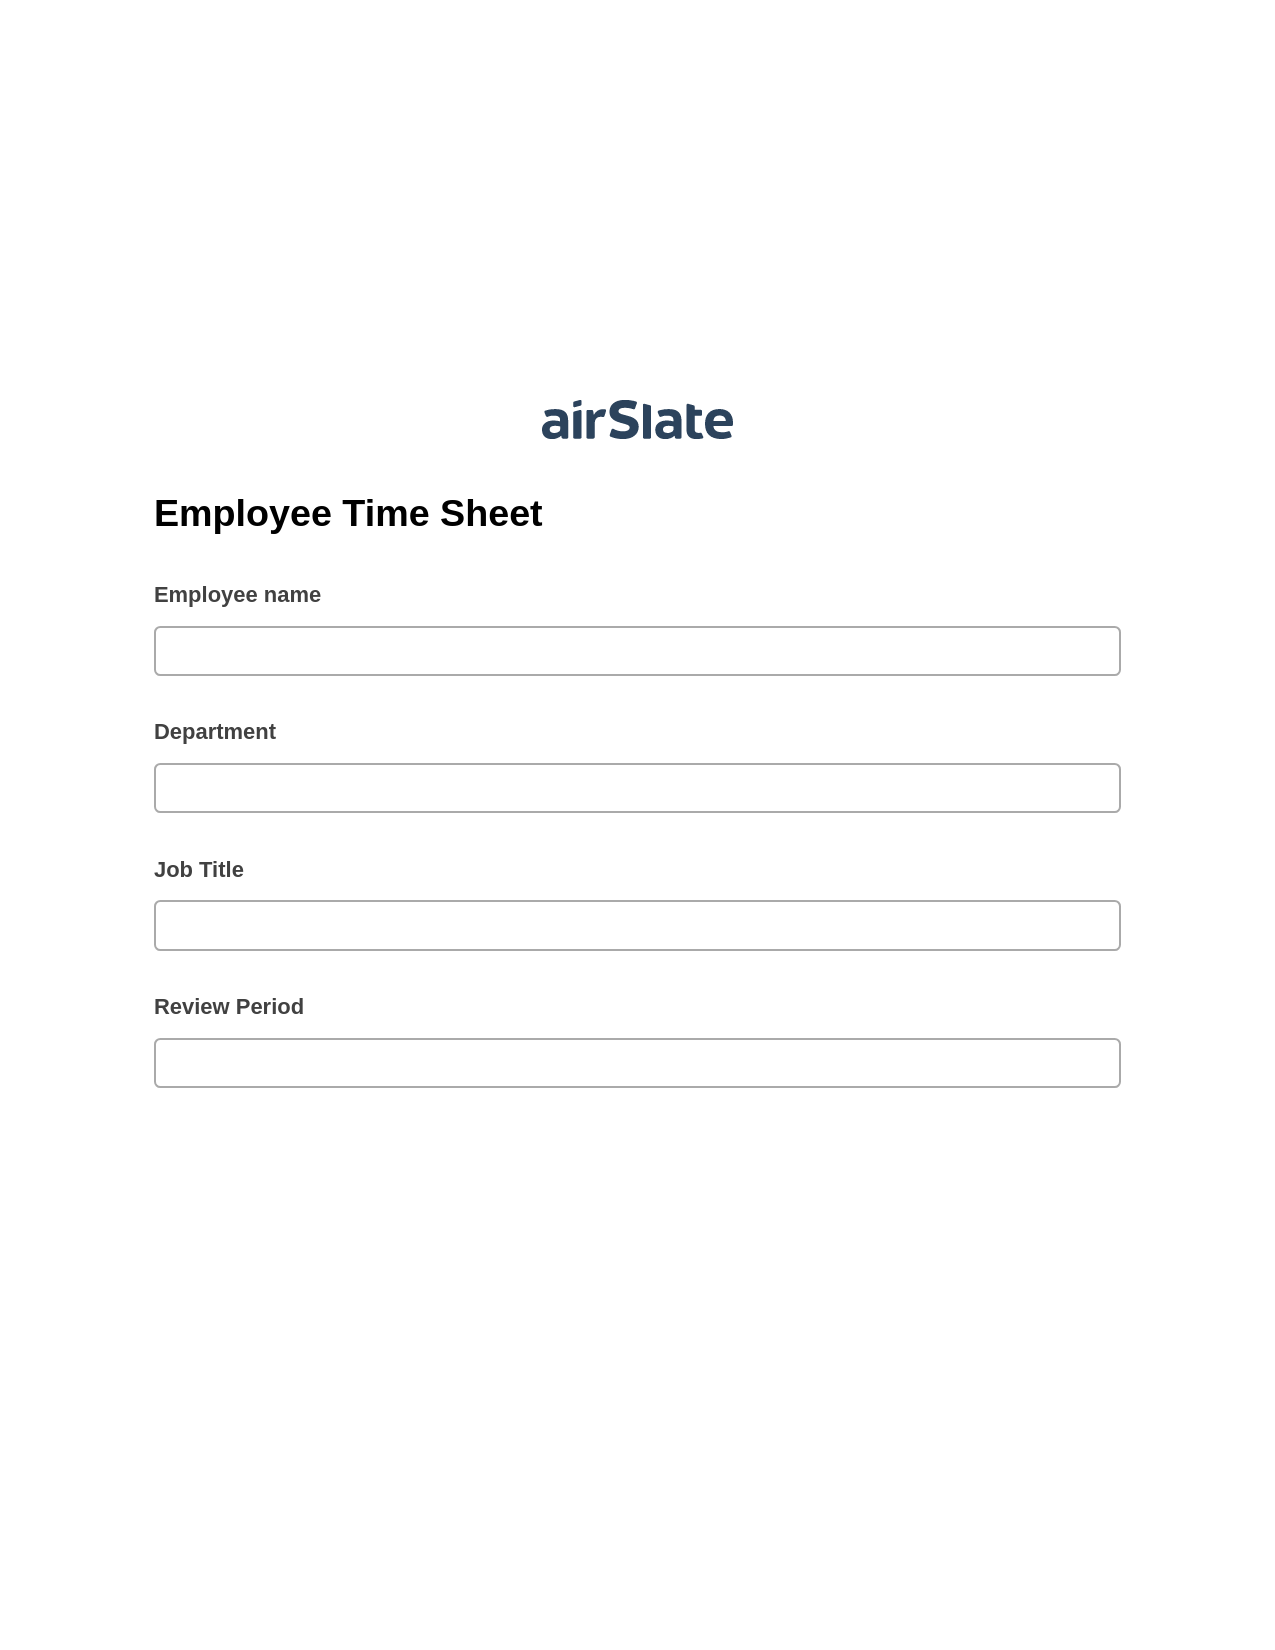 Multirole Employee Time Sheet Pre-fill Dropdowns from Google Sheet Bot, Invoke Salesforce Process Bot, Archive to SharePoint Folder Bot